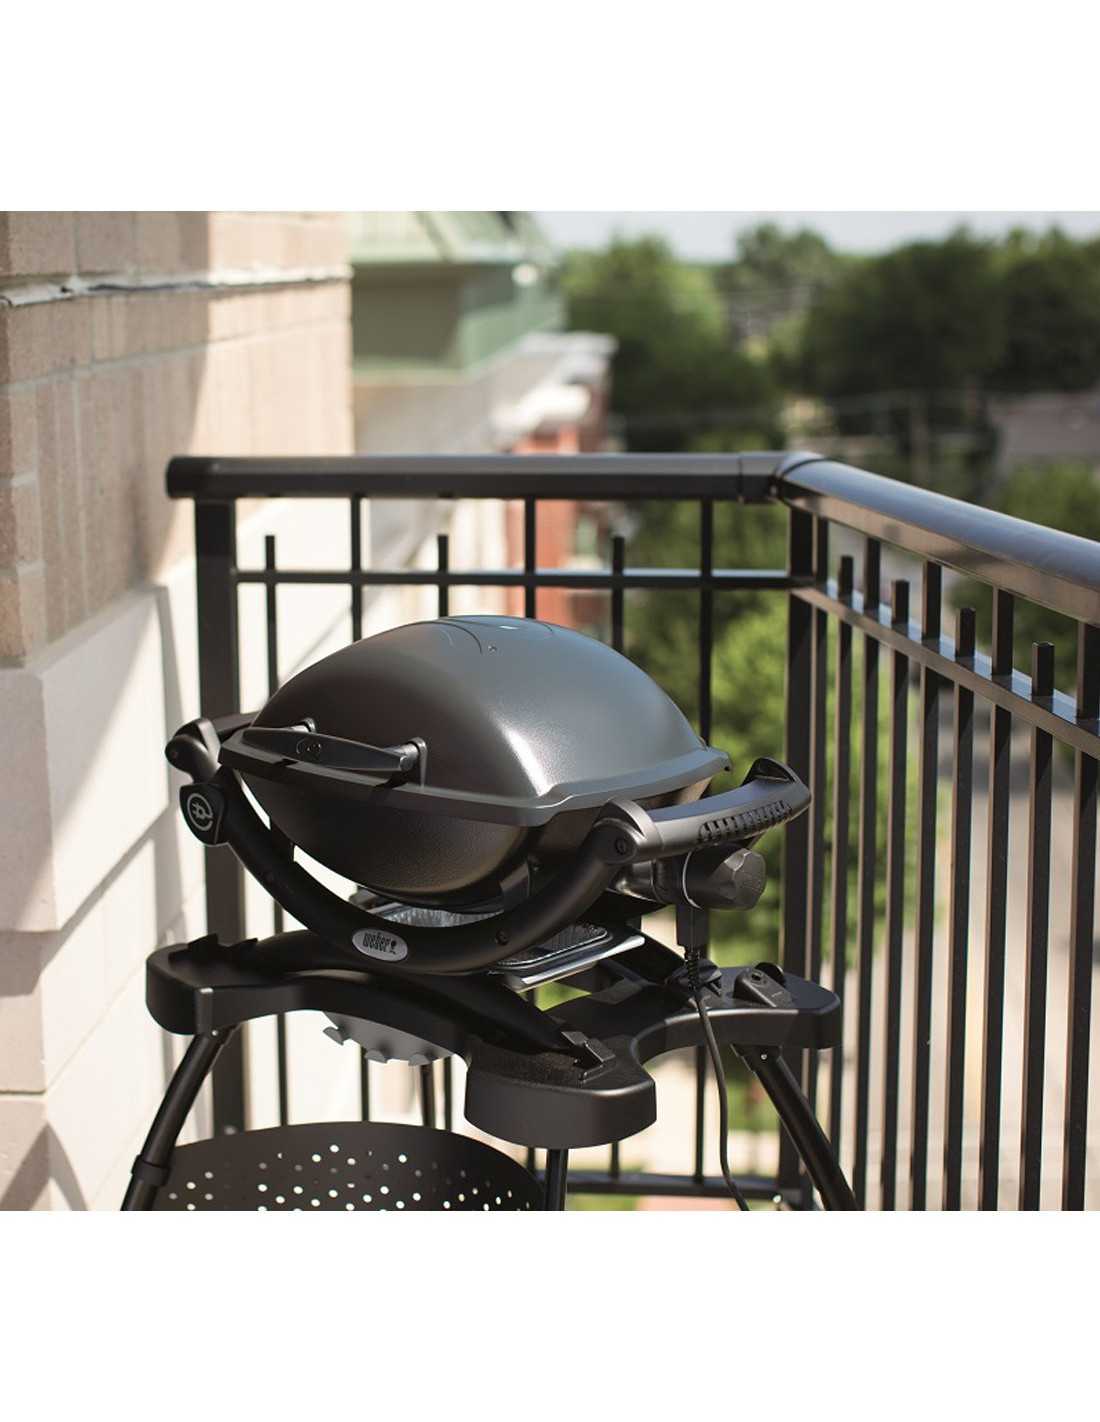 Weber barbecue Q2400 dark grey}